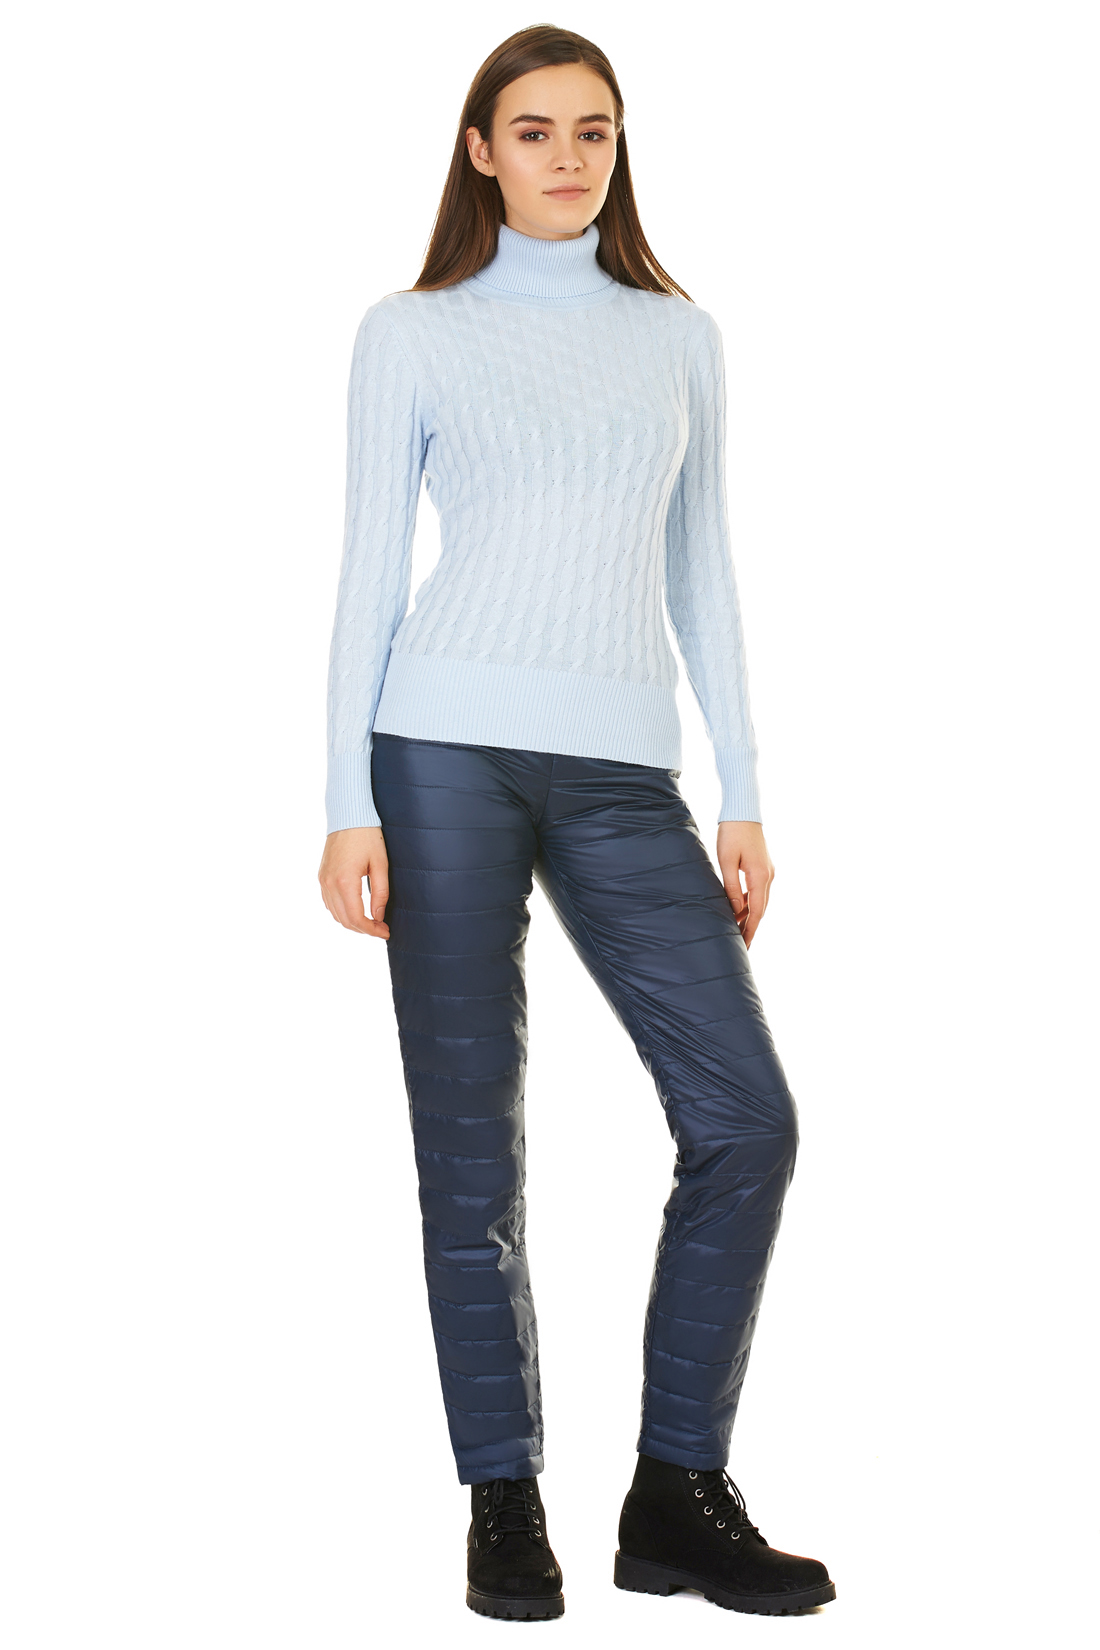 Утеплённые брюки без застёжки (арт. baon B297503), размер XL, цвет синий Утеплённые брюки без застёжки (арт. baon B297503) - фото 5